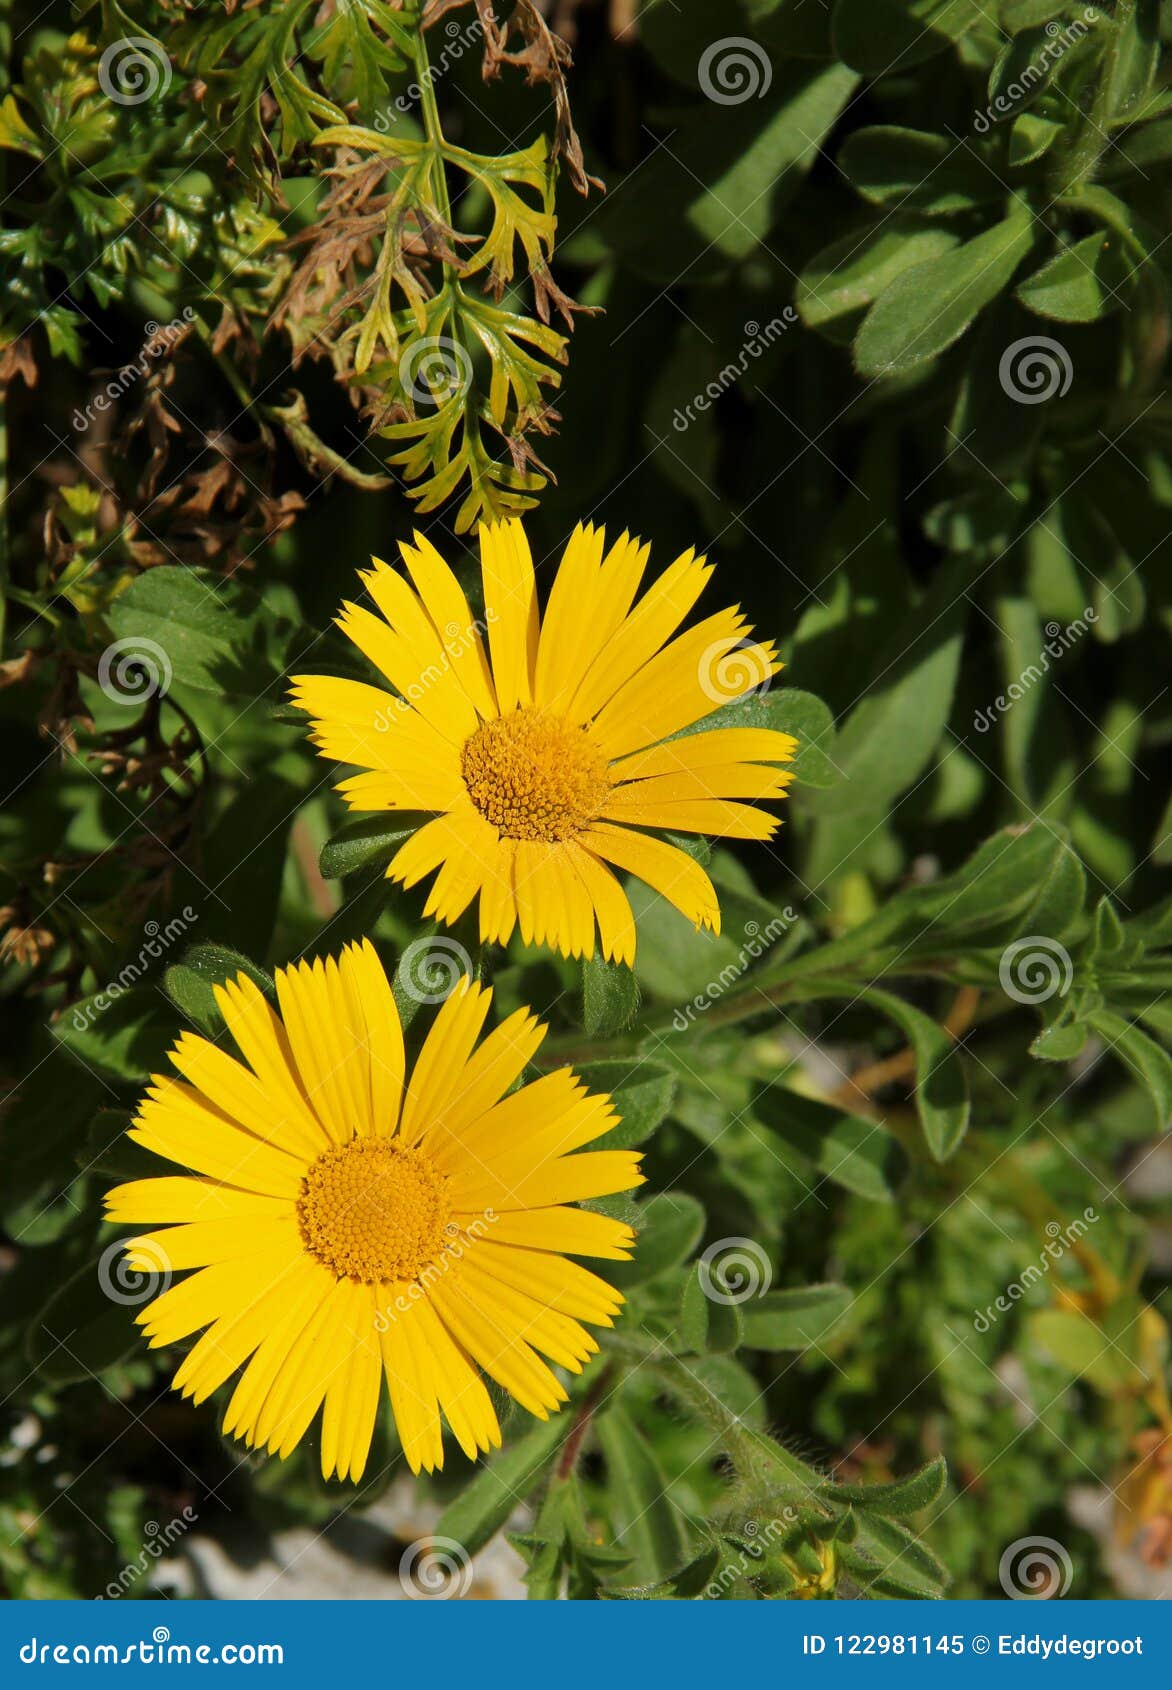 euryops pectinatus or south african daisy